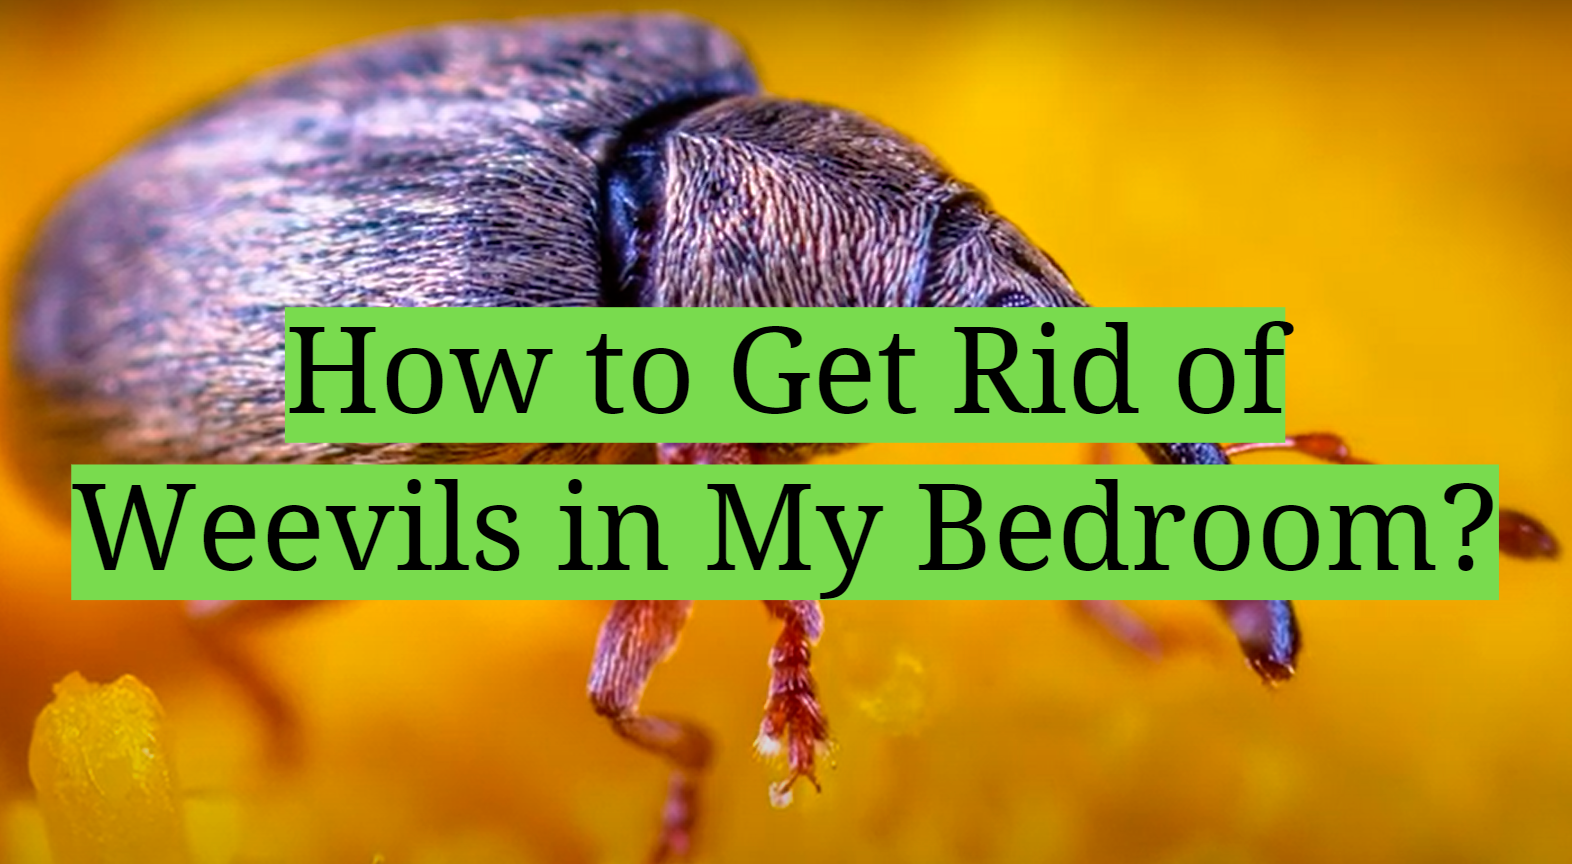 How to Get Rid of Weevils in My Bedroom?